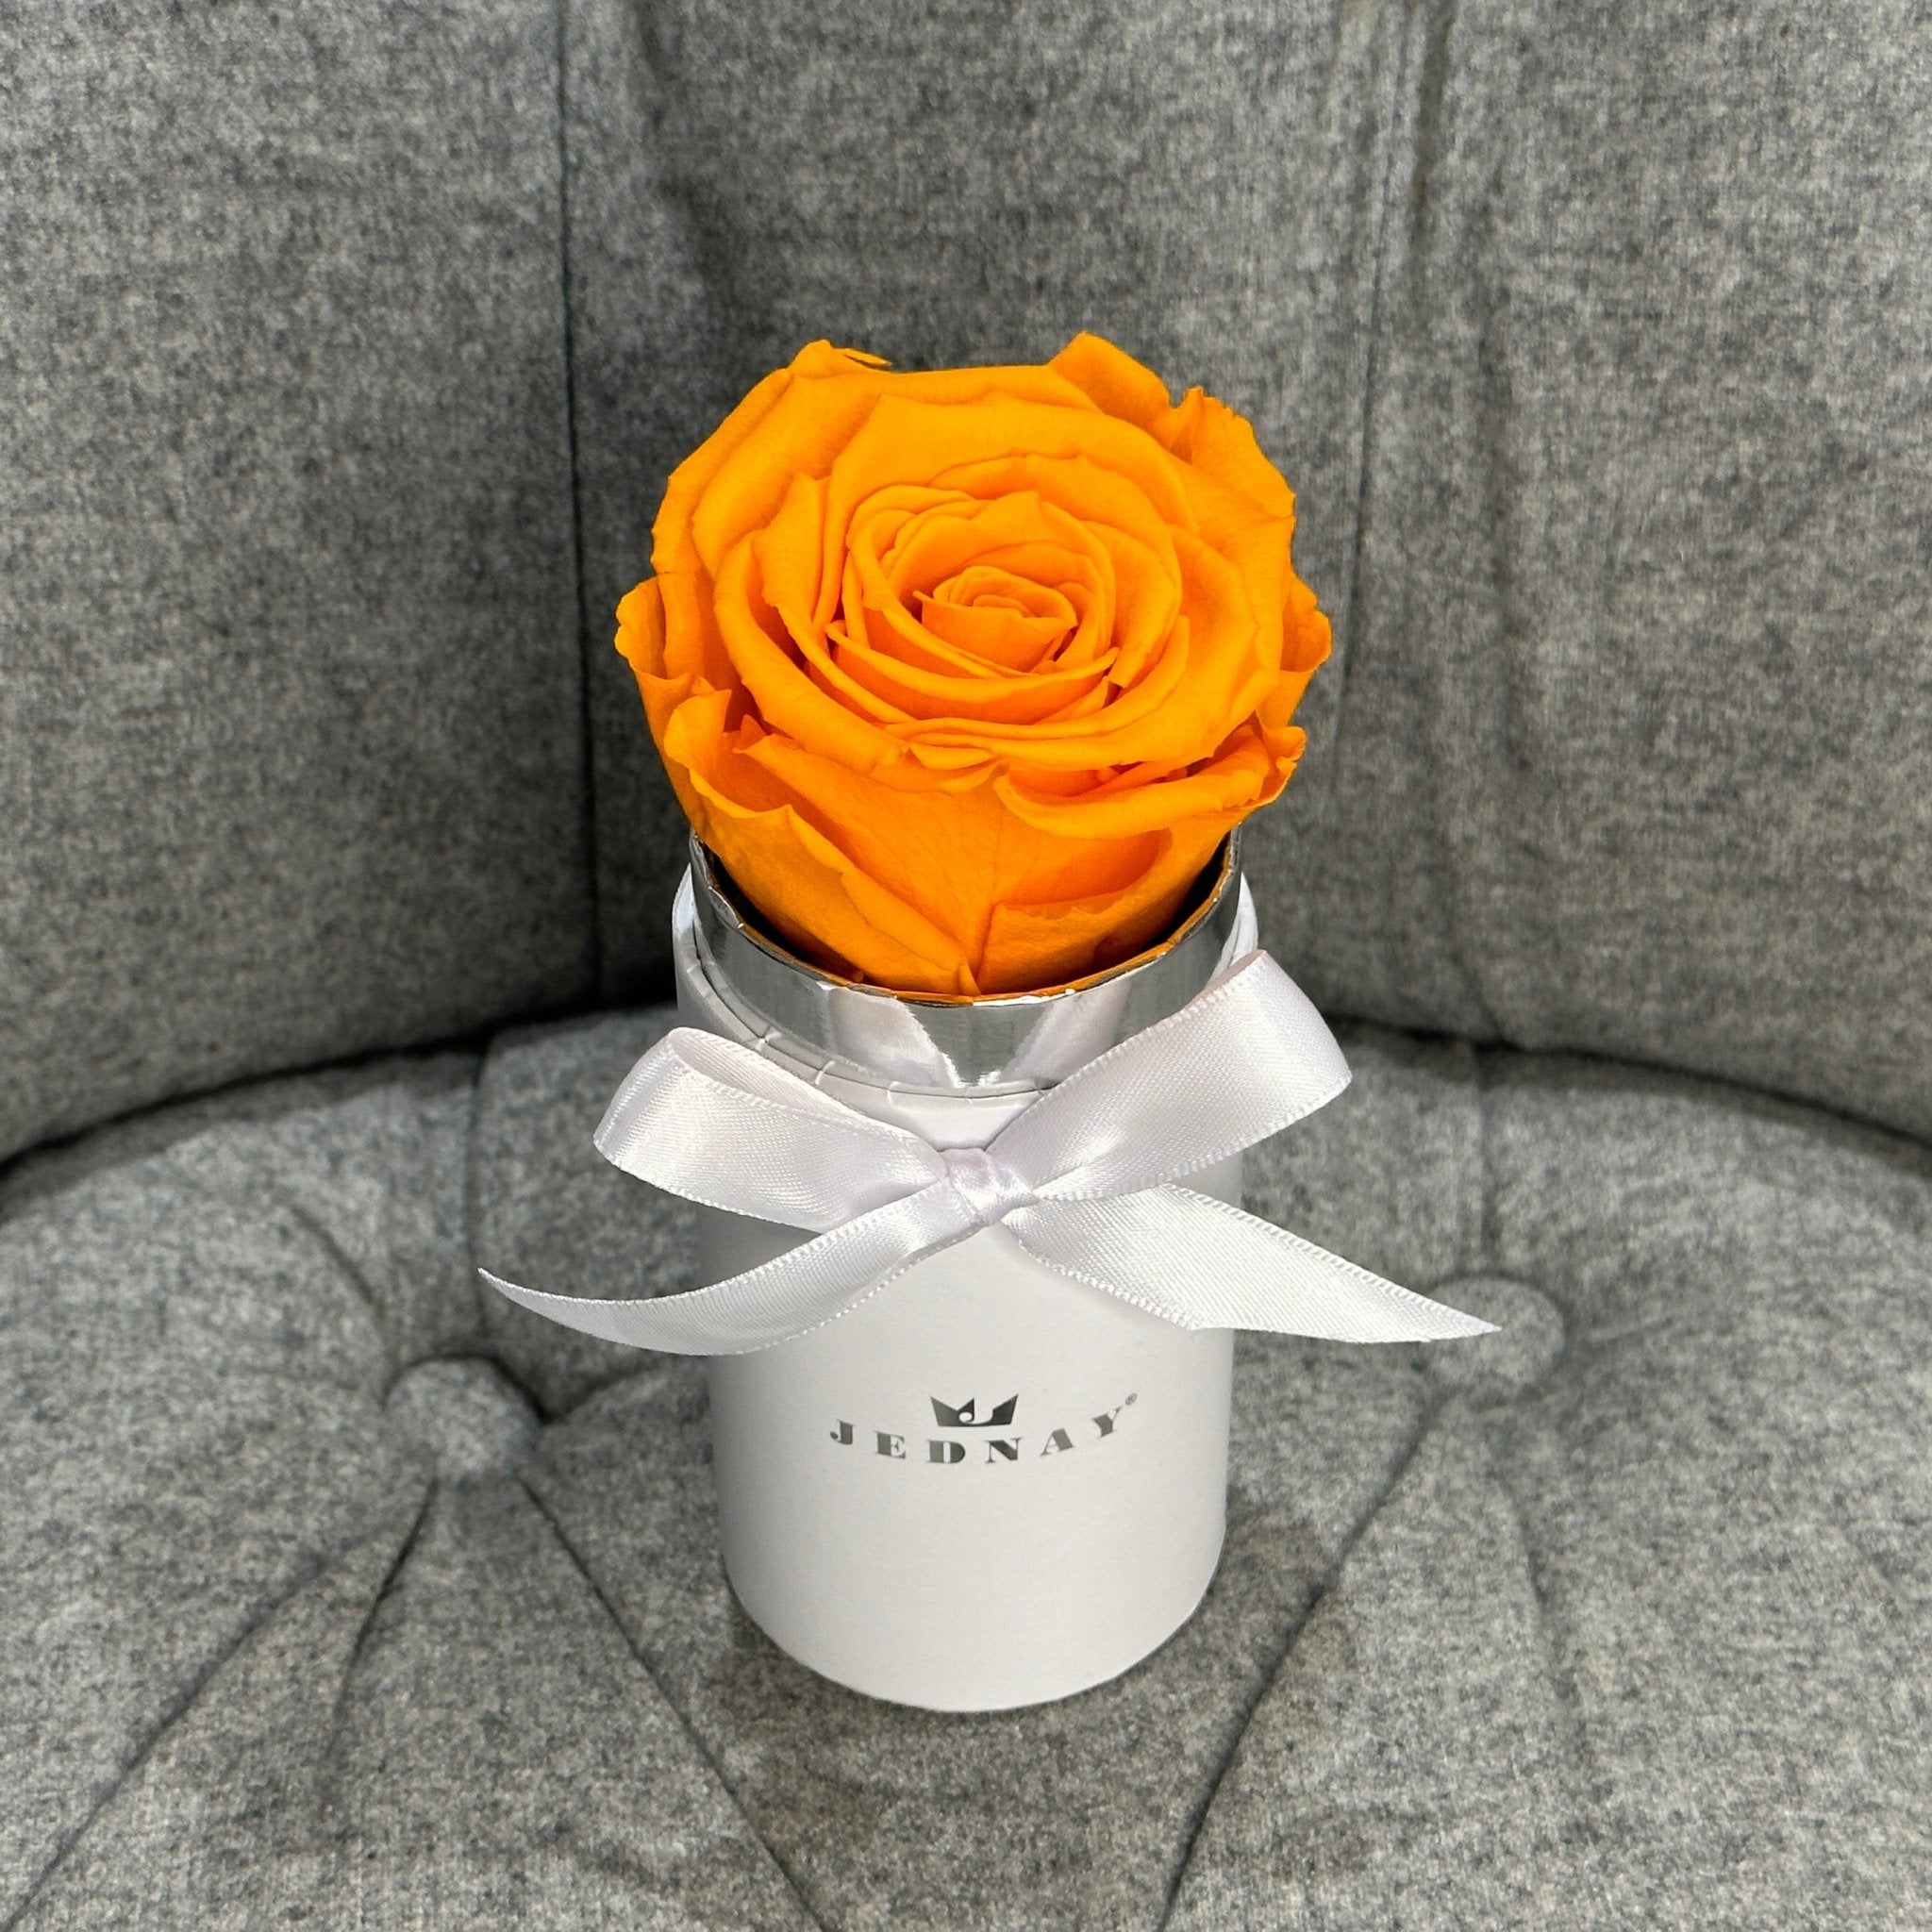 The Uno - Sunset Orange Eternal Rose - Classic White Box - Jednay Roses